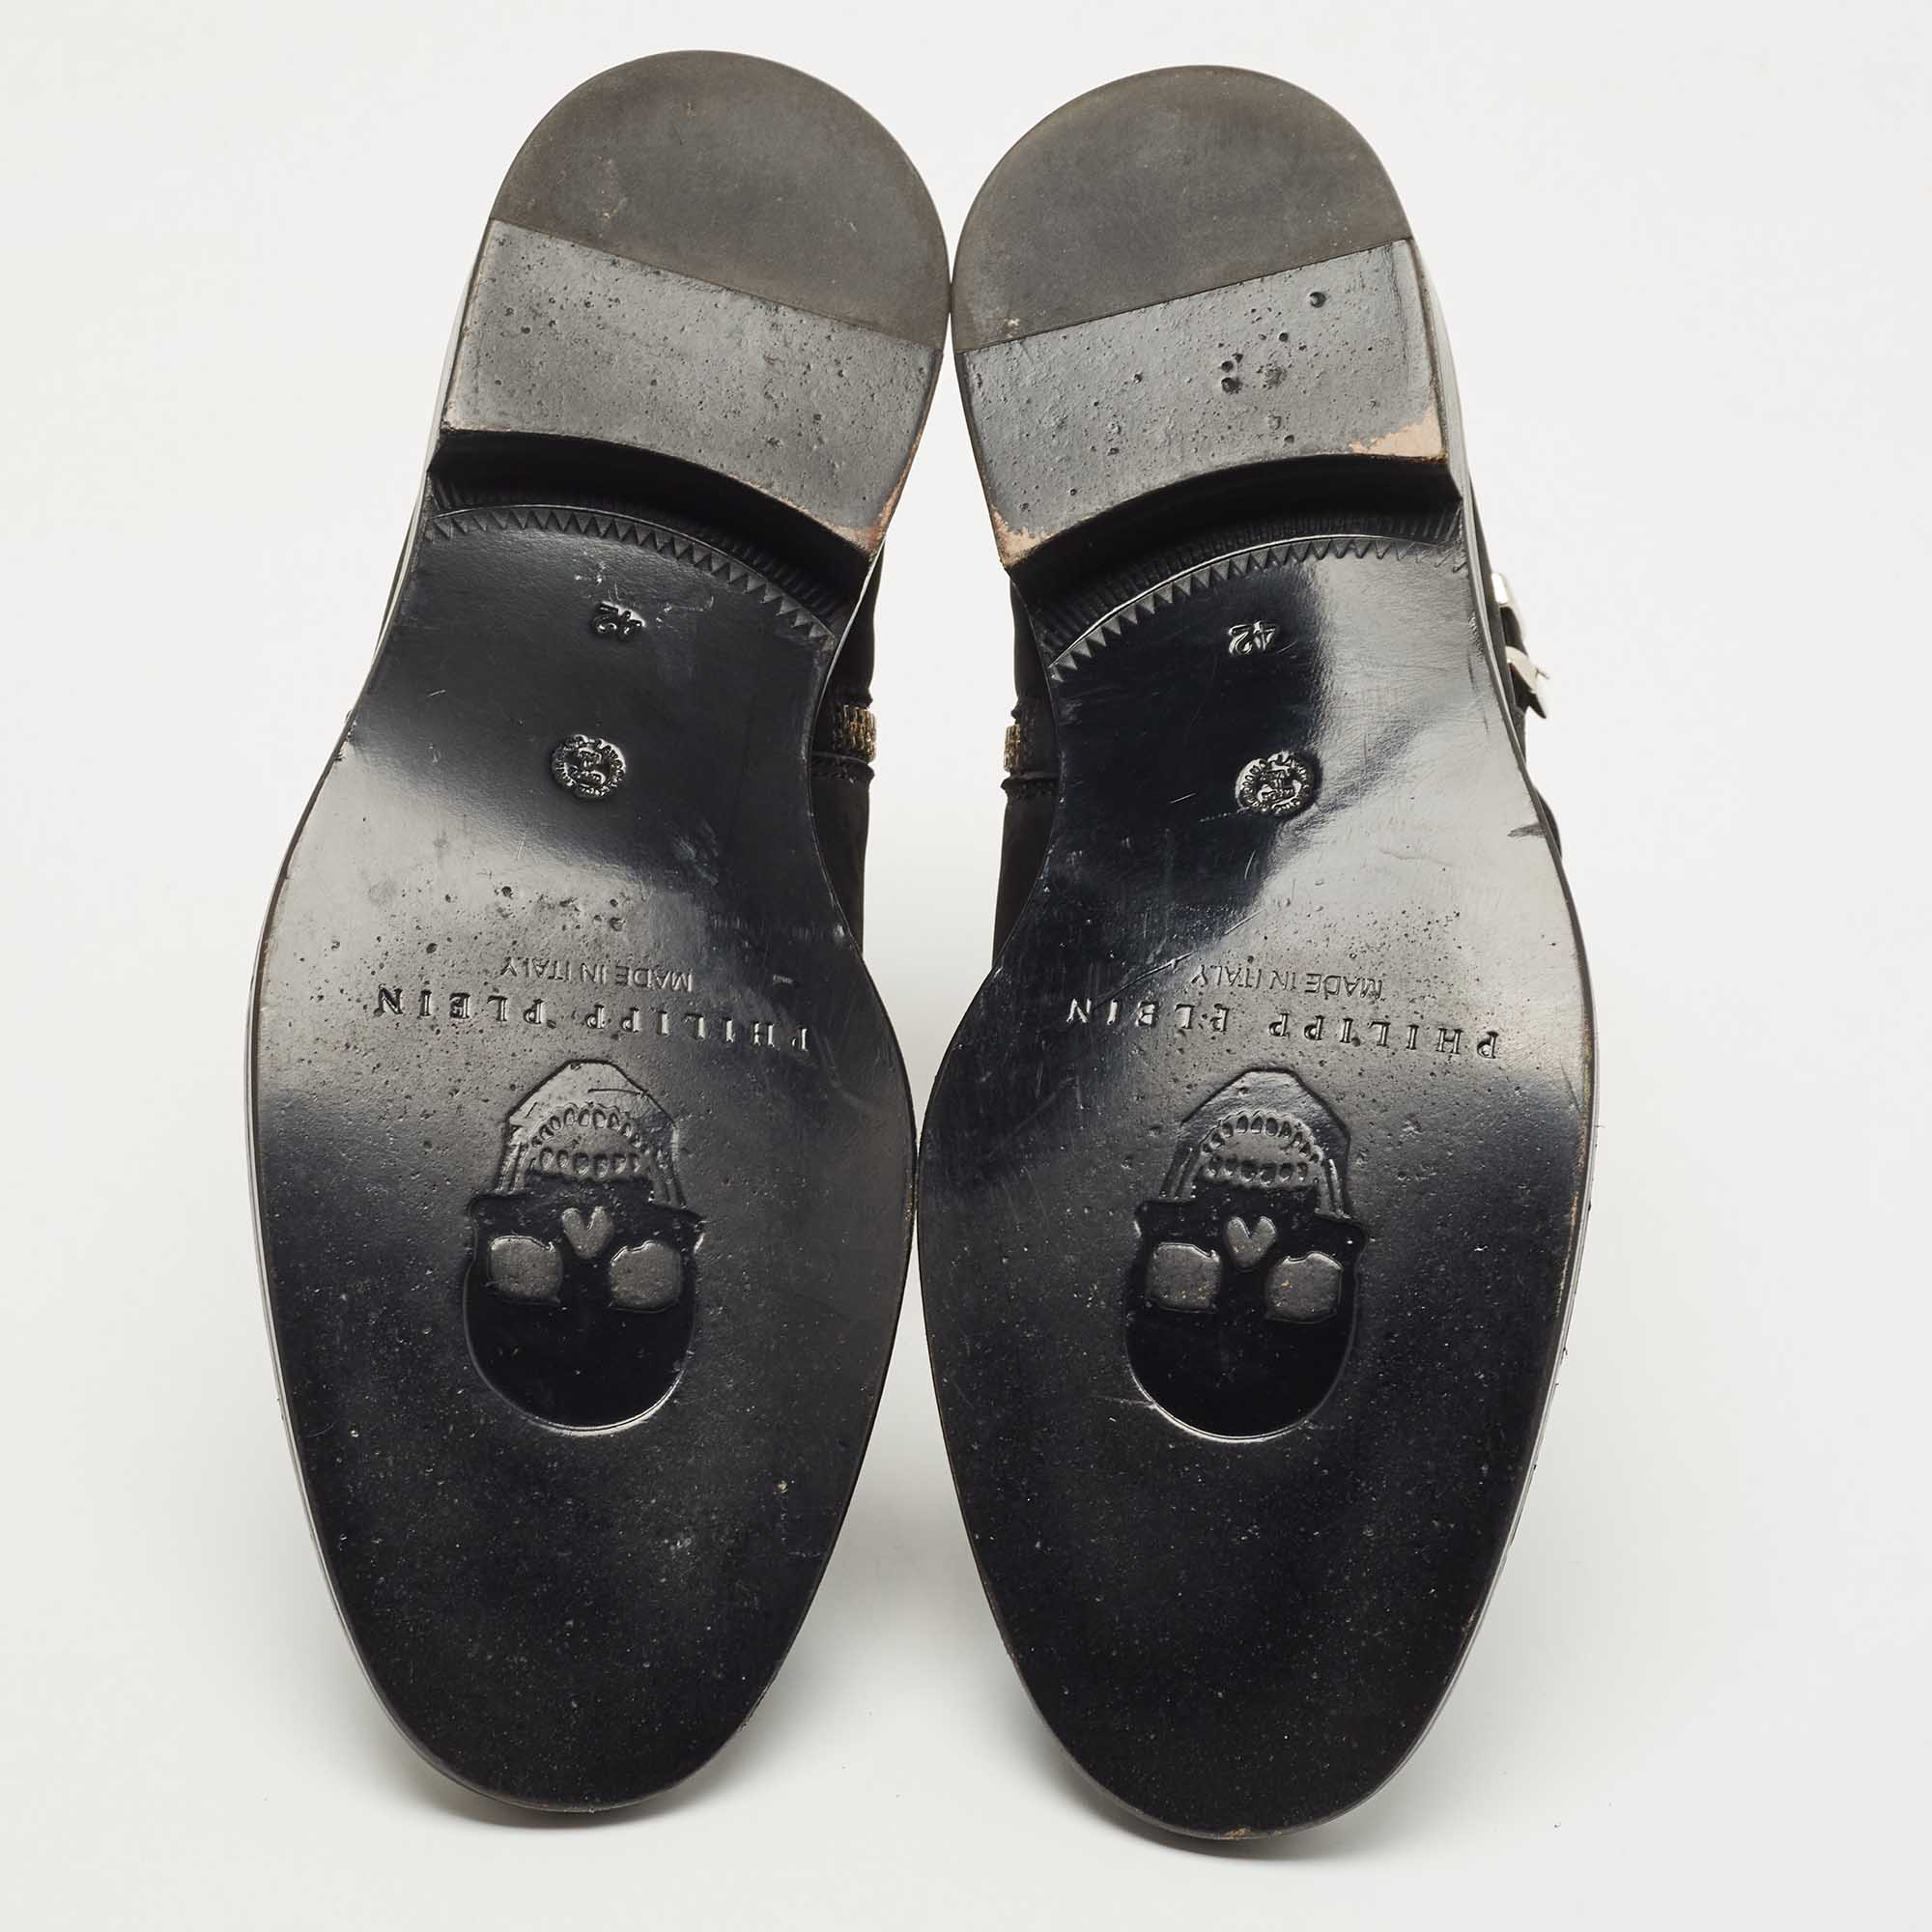 Philipp Plein Black Suede Studded Boots Size 42